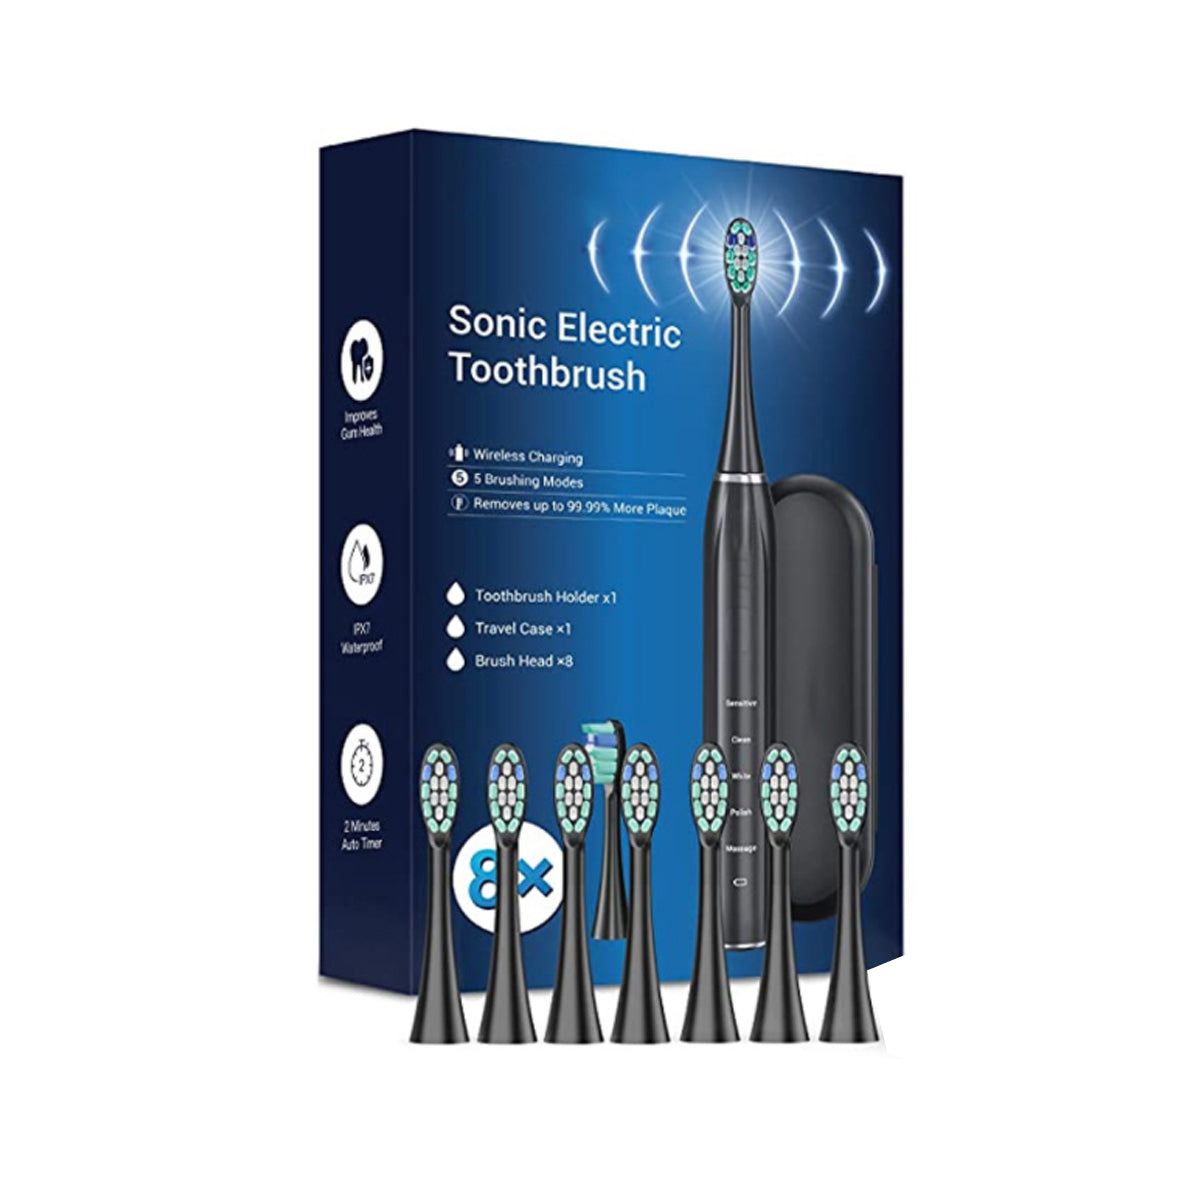  Smart Sonic Dental Care Toothbrush With 8 Brush Heads by VistaShops VistaShops Perfumarie